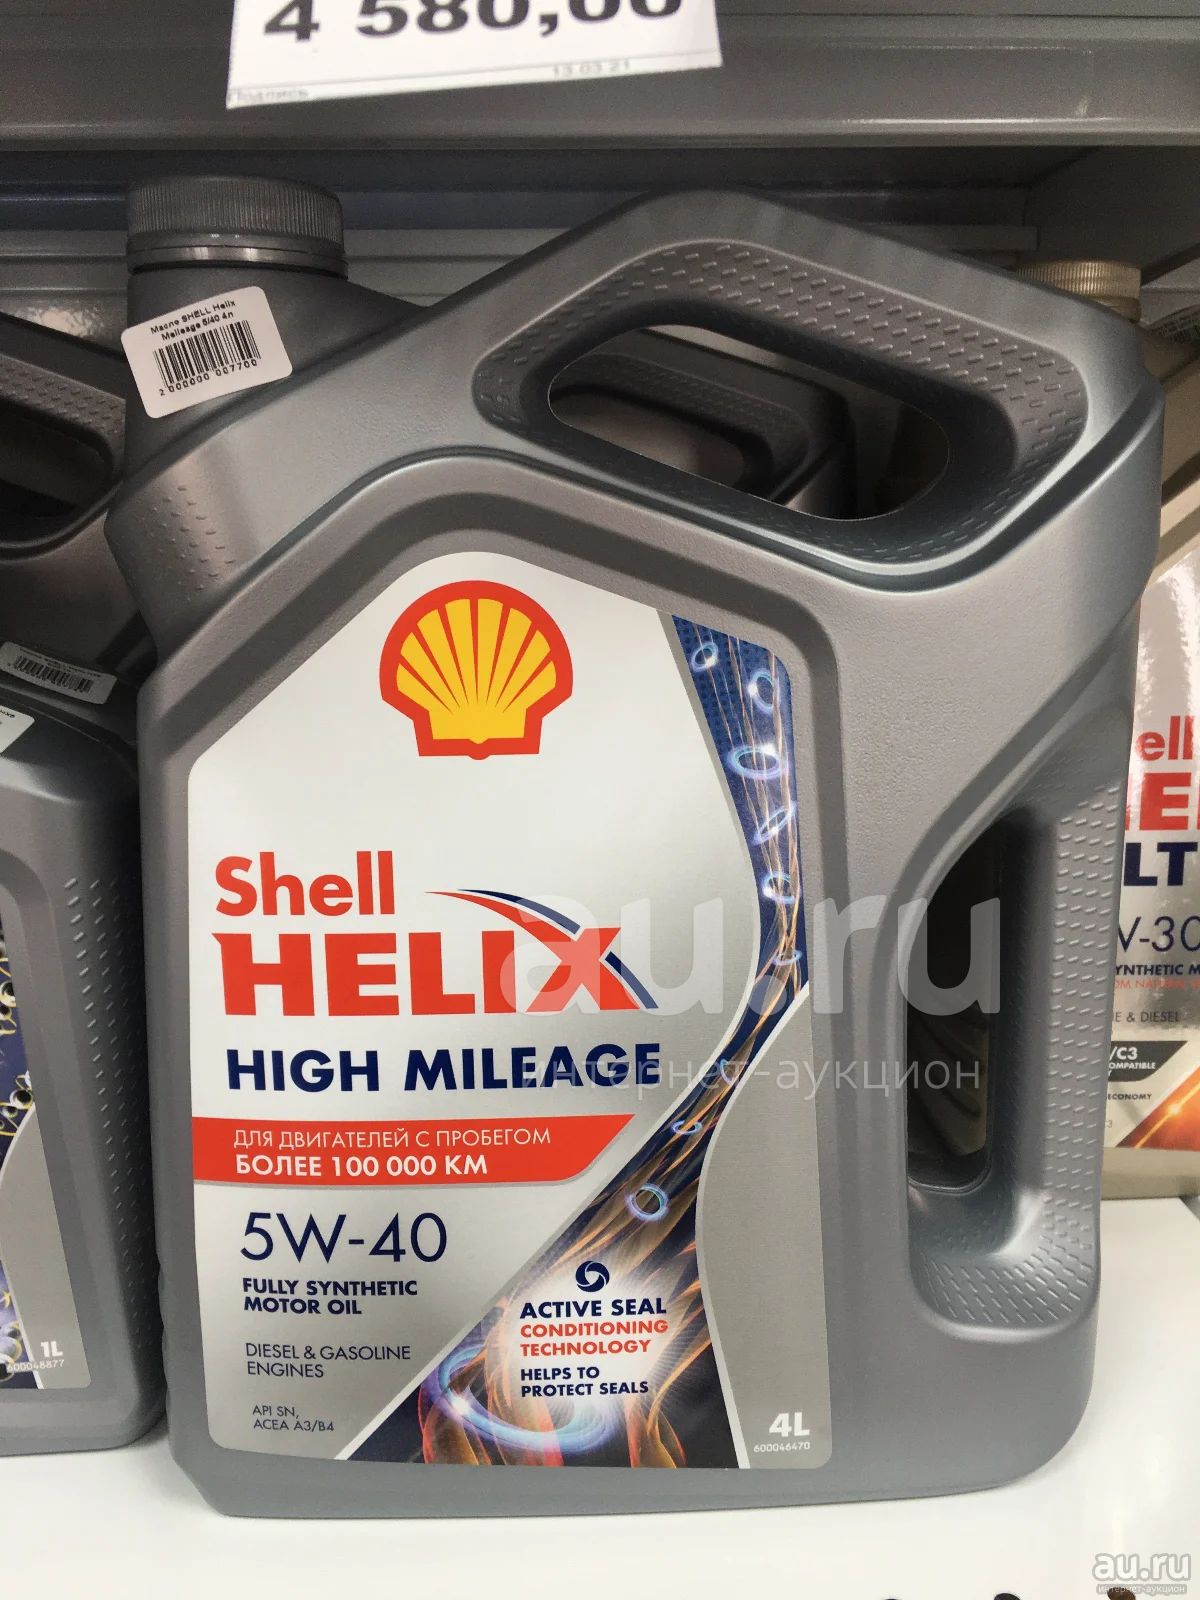 Shell Helix Mileage. High mileage 5w 40